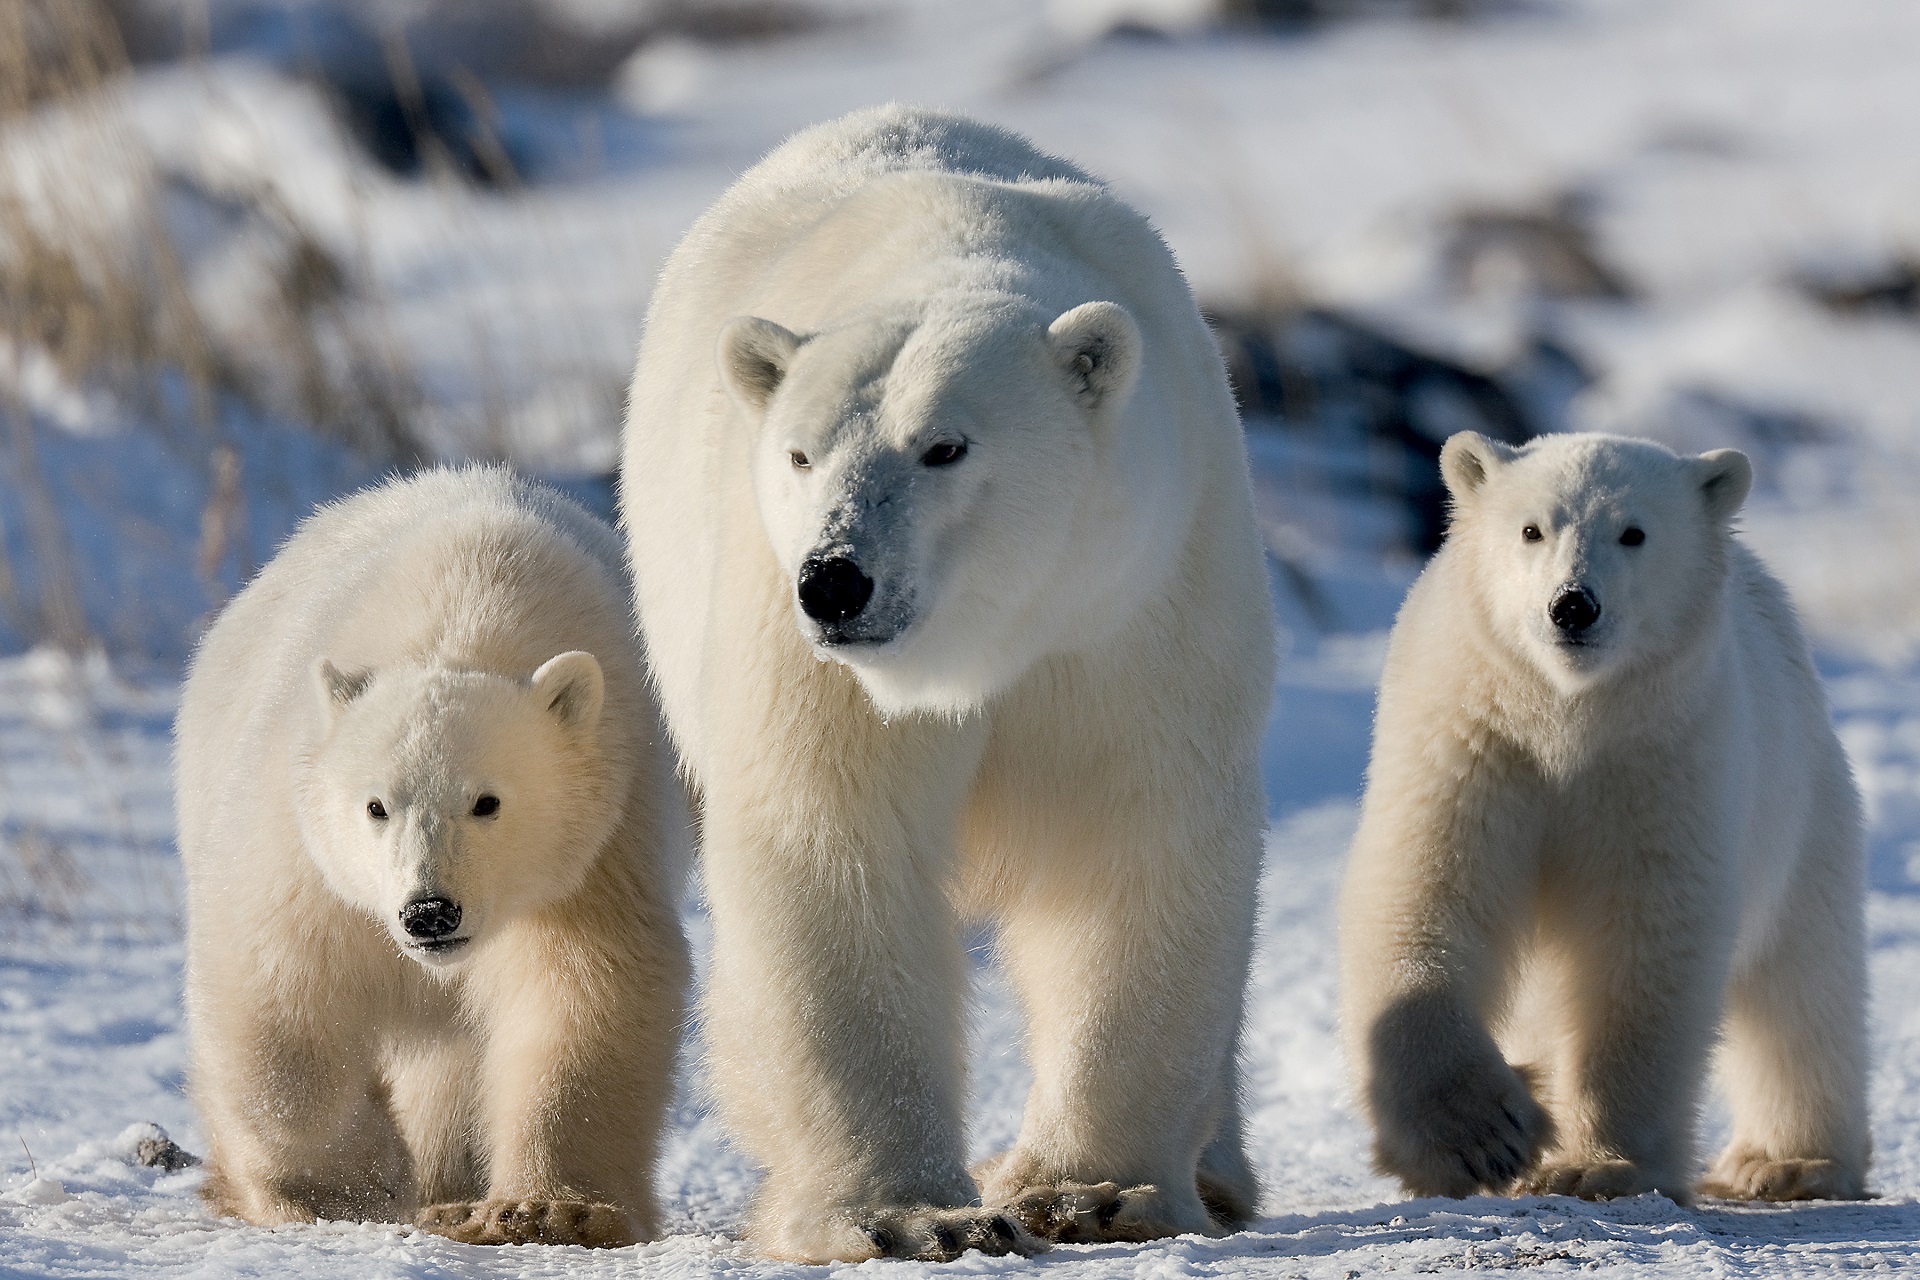 Polar bear mom and cubs. Dymond Lake Ecolodge. Michael Poliza photo.